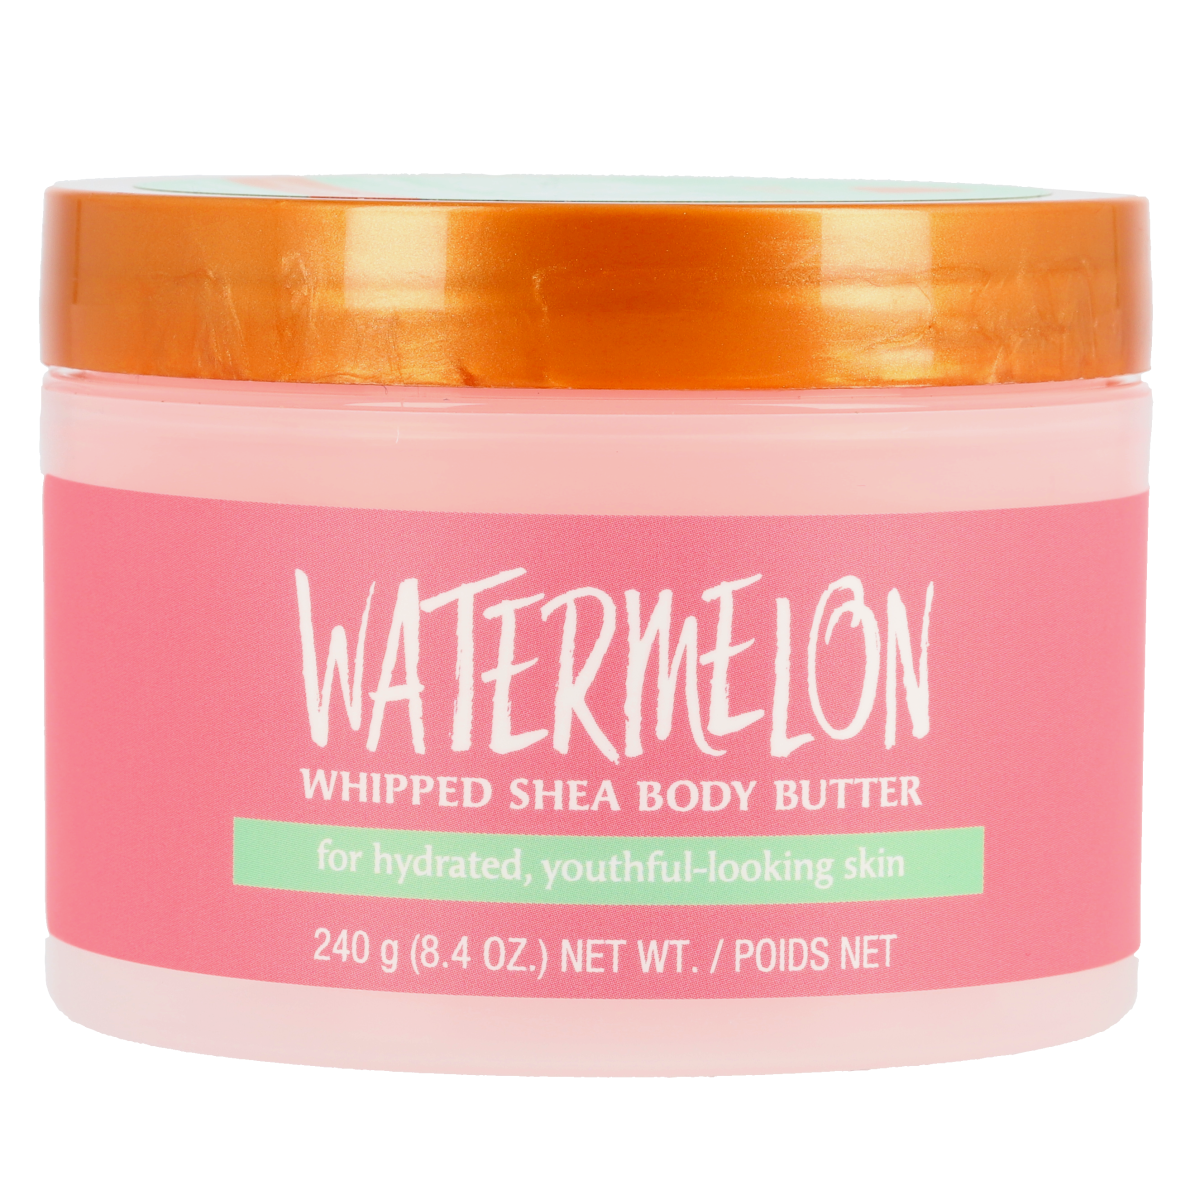 Watermelon whipped body butter - tree hut - nuestro secreto